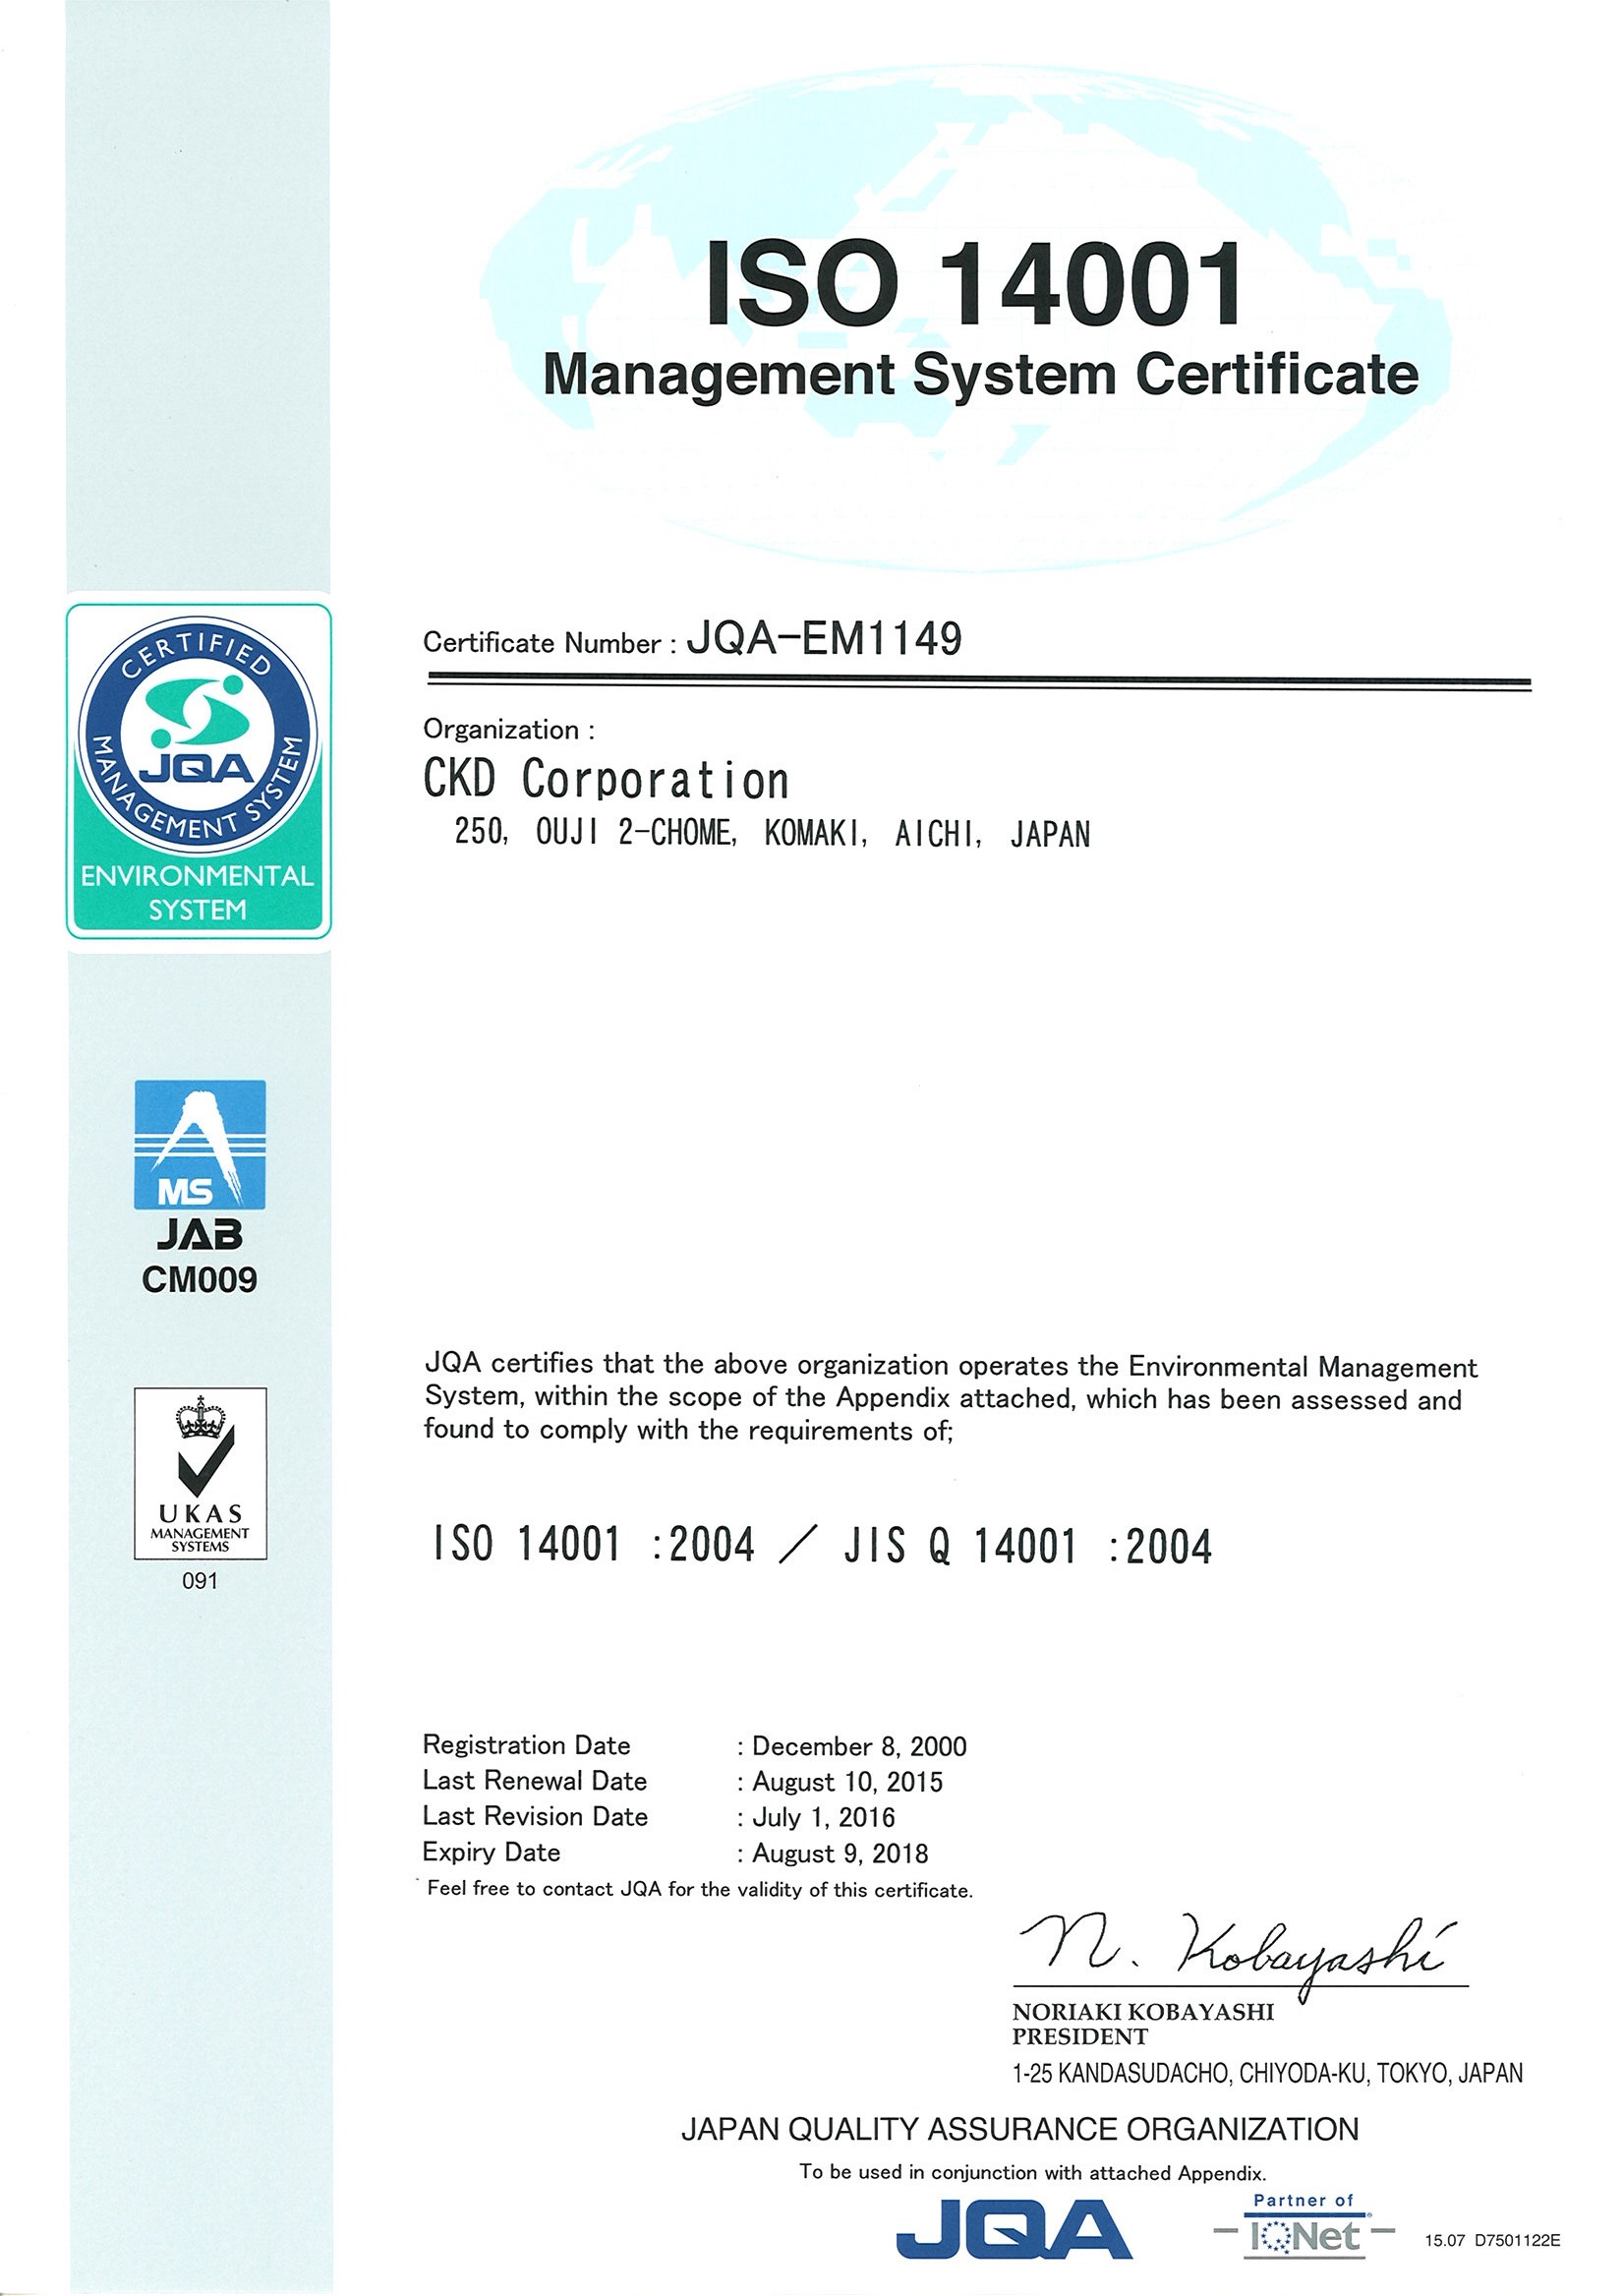 ISO14001 등록증